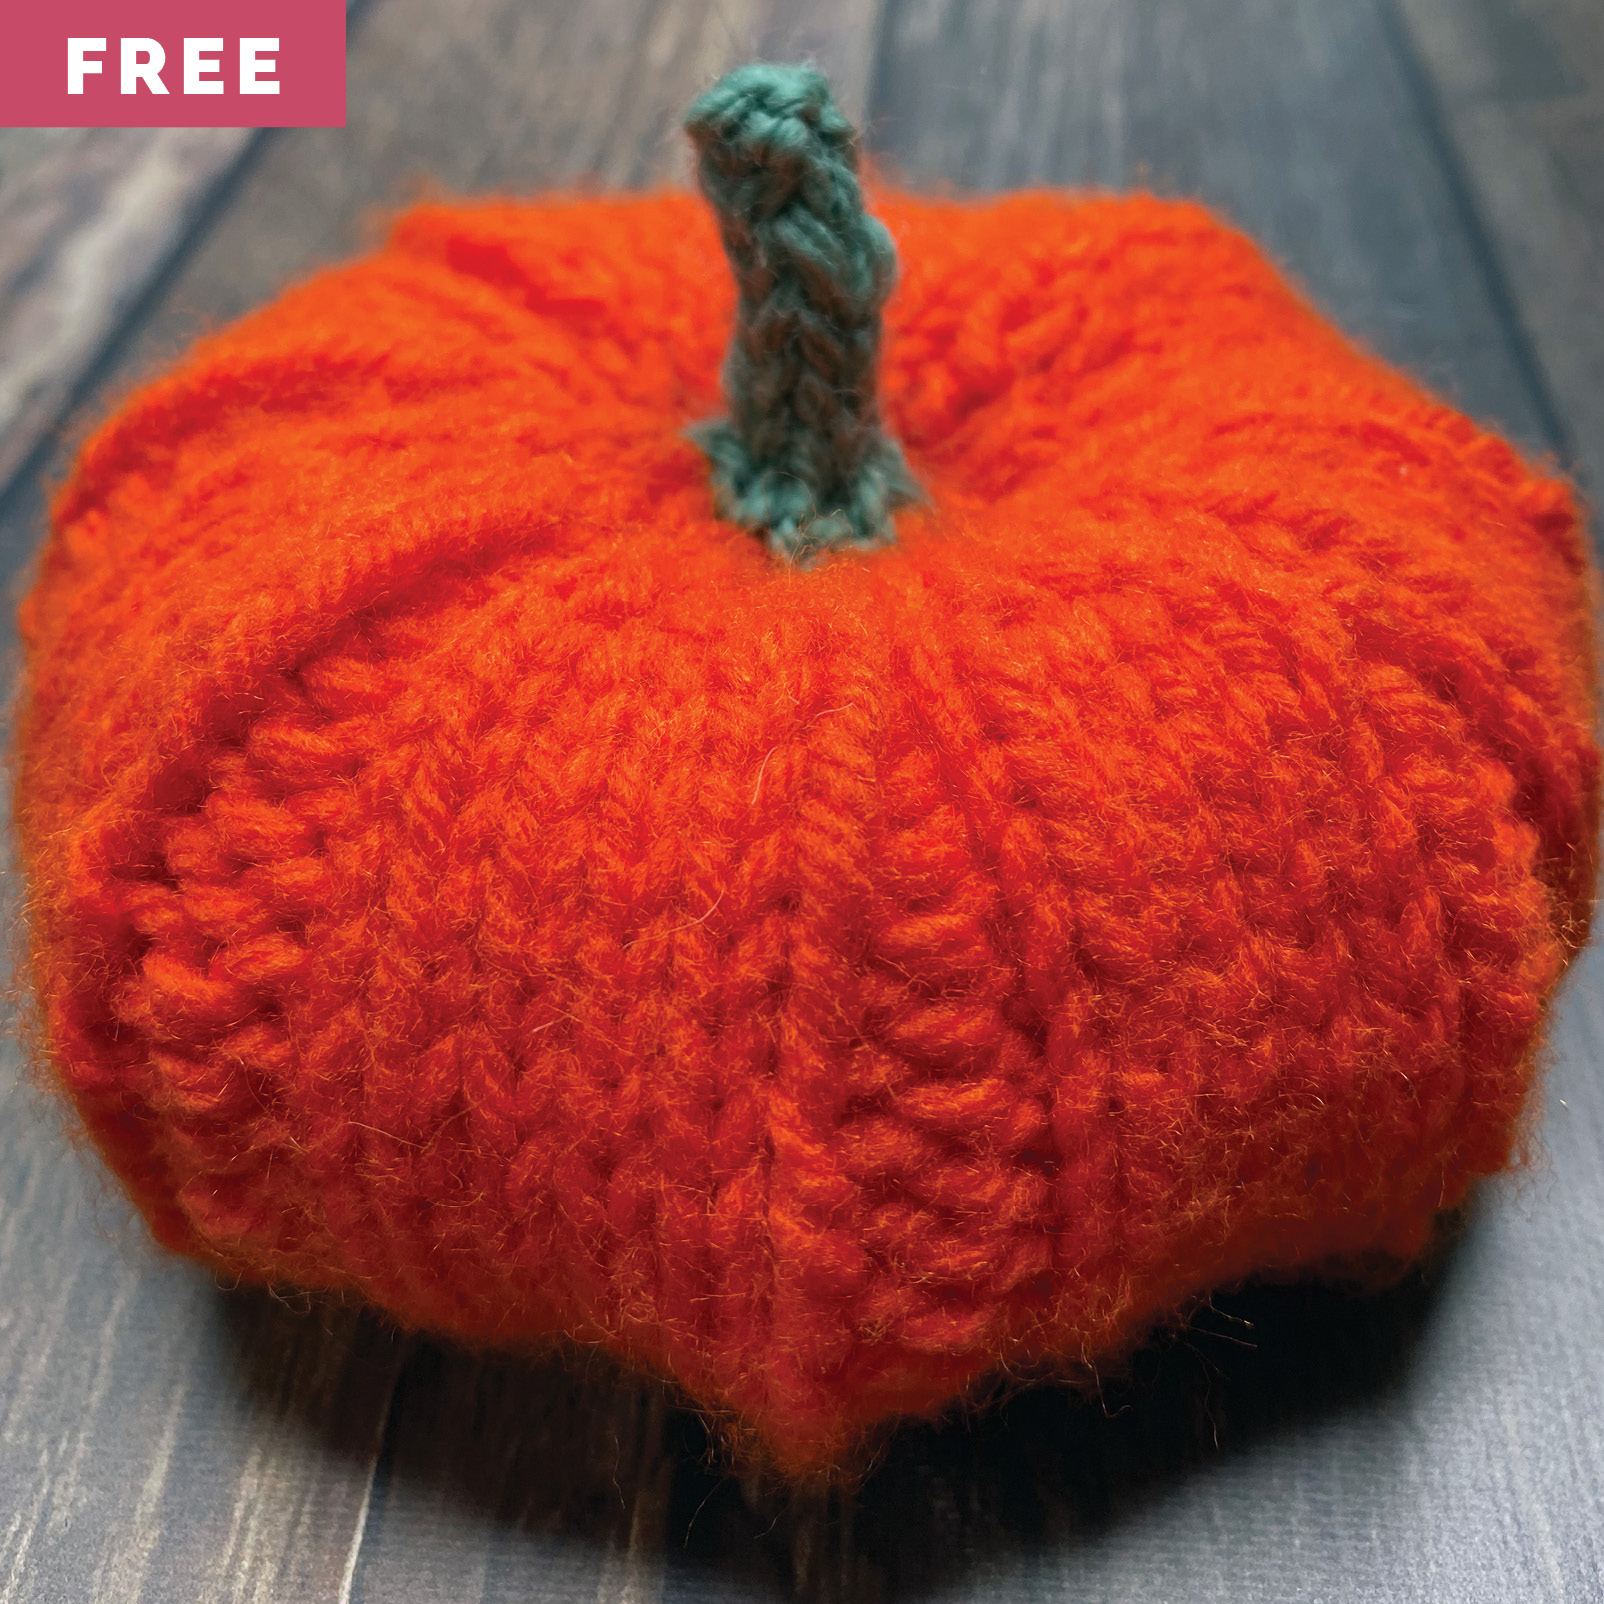 Free Knitting Pattern - Knitted Mini Pumpkin